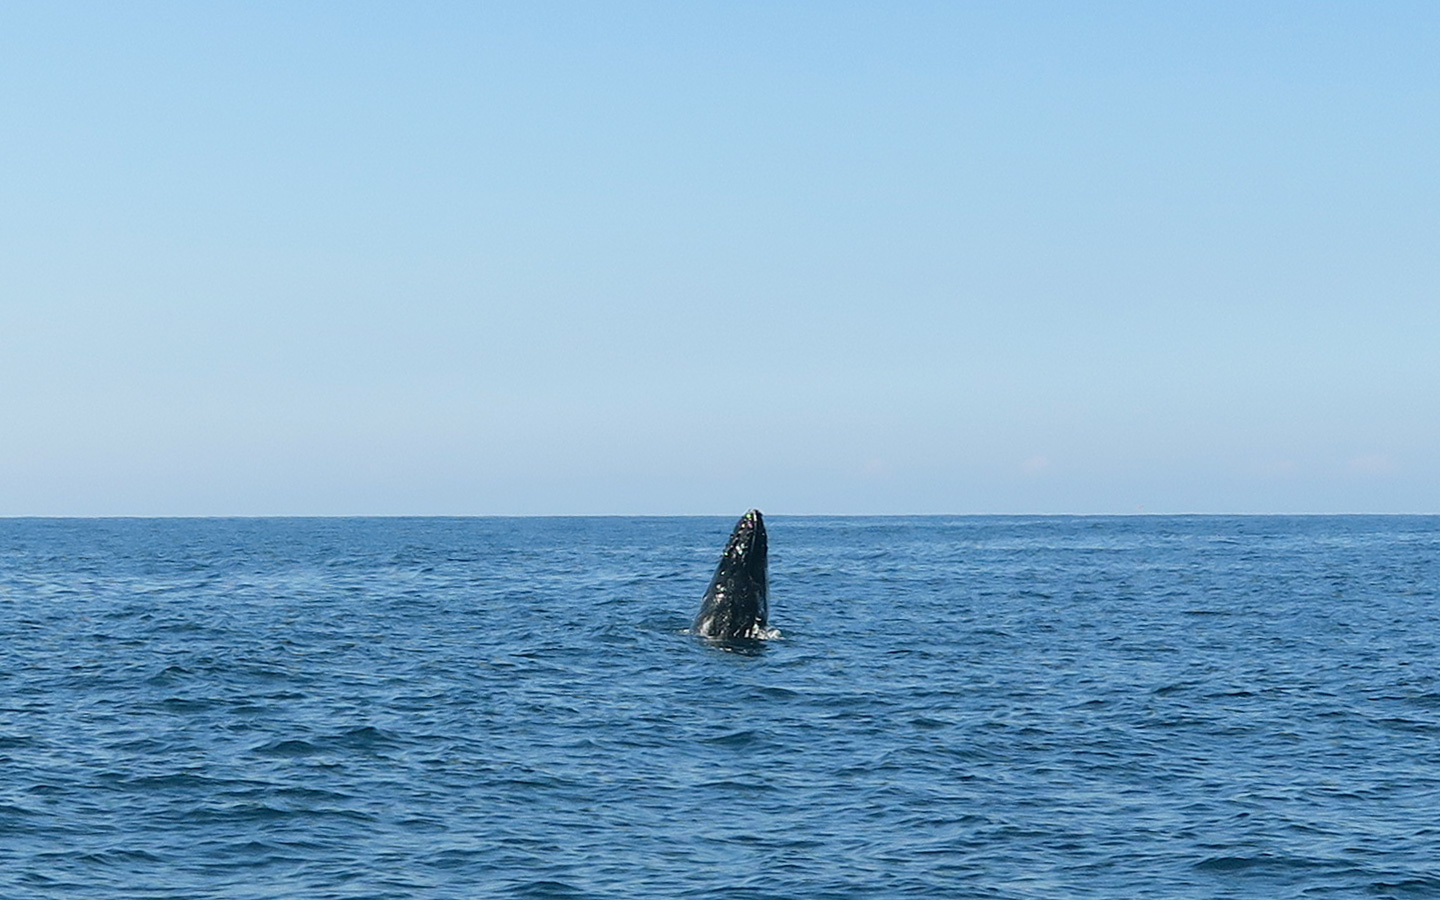 humpback whale breaching in the sea near sydney in australia